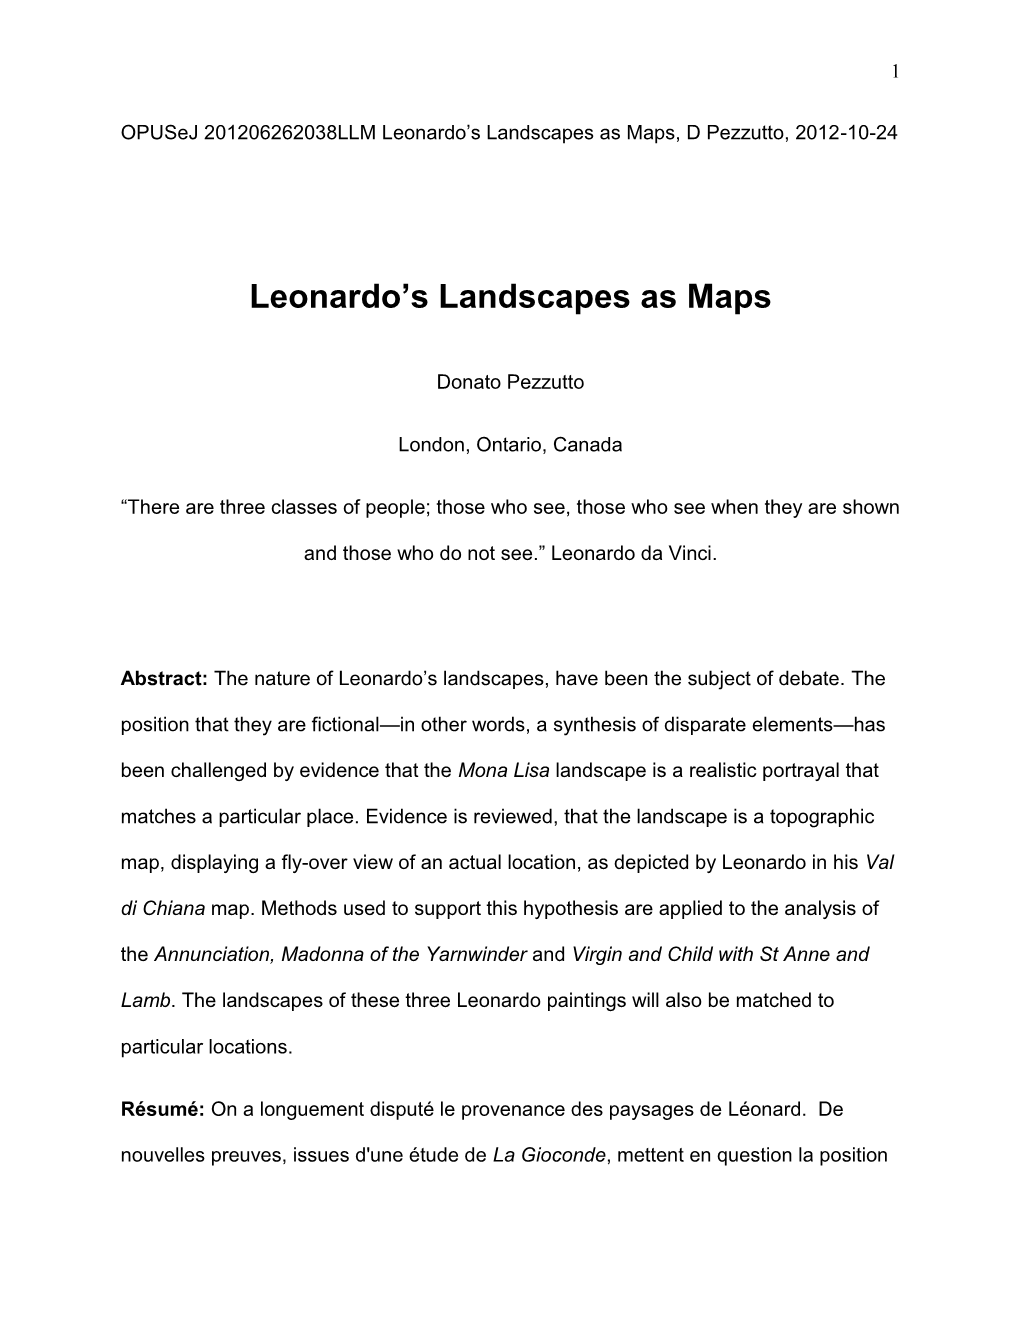 Leonardo's Landscapes As Maps